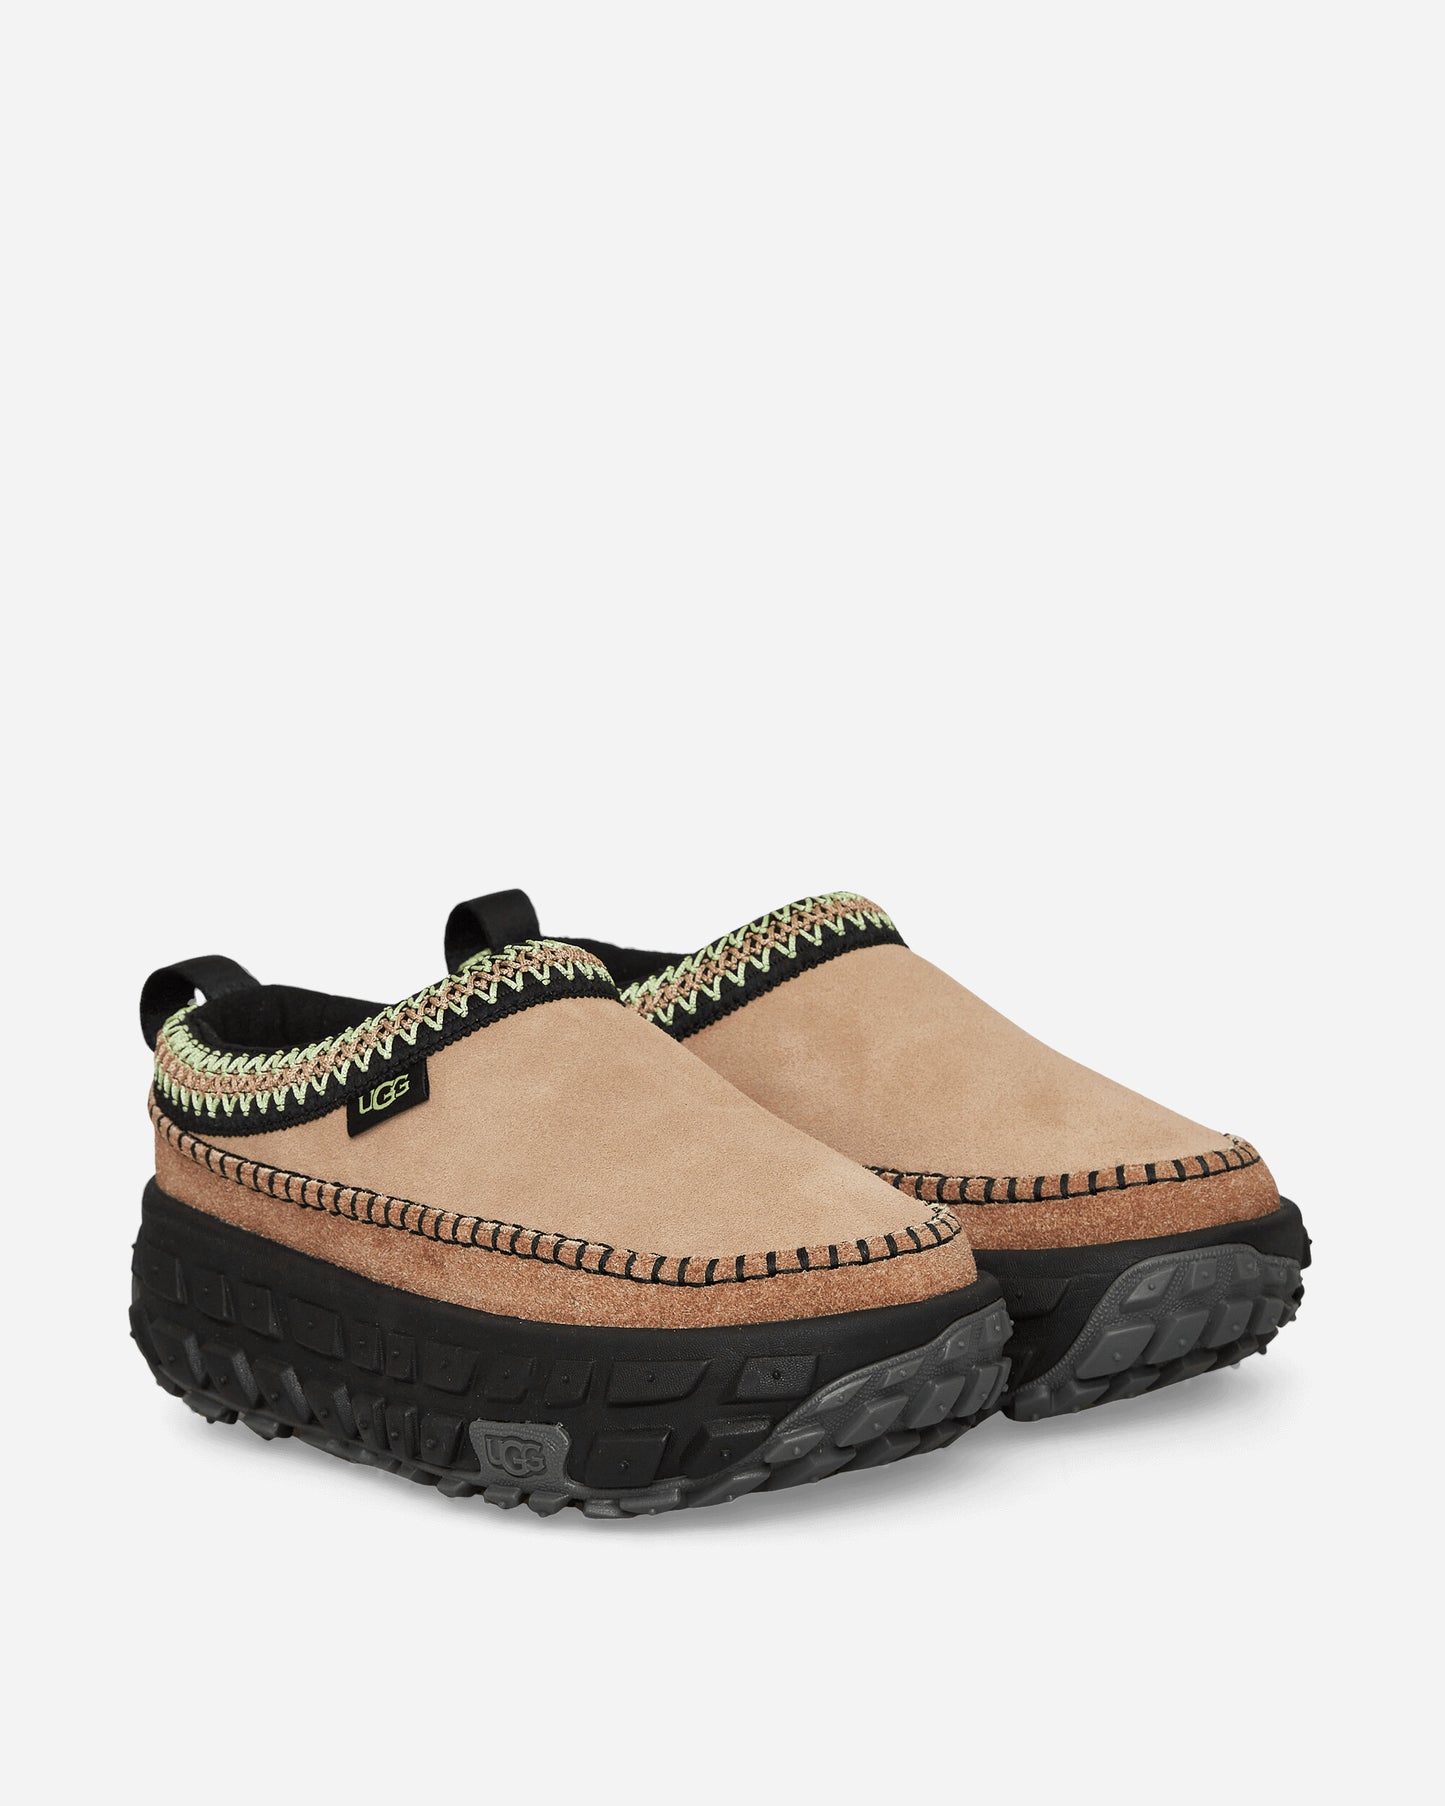 UGG Venture Daze Sand/Black Classic Shoes Sandals and Mules 1154530 SNDB